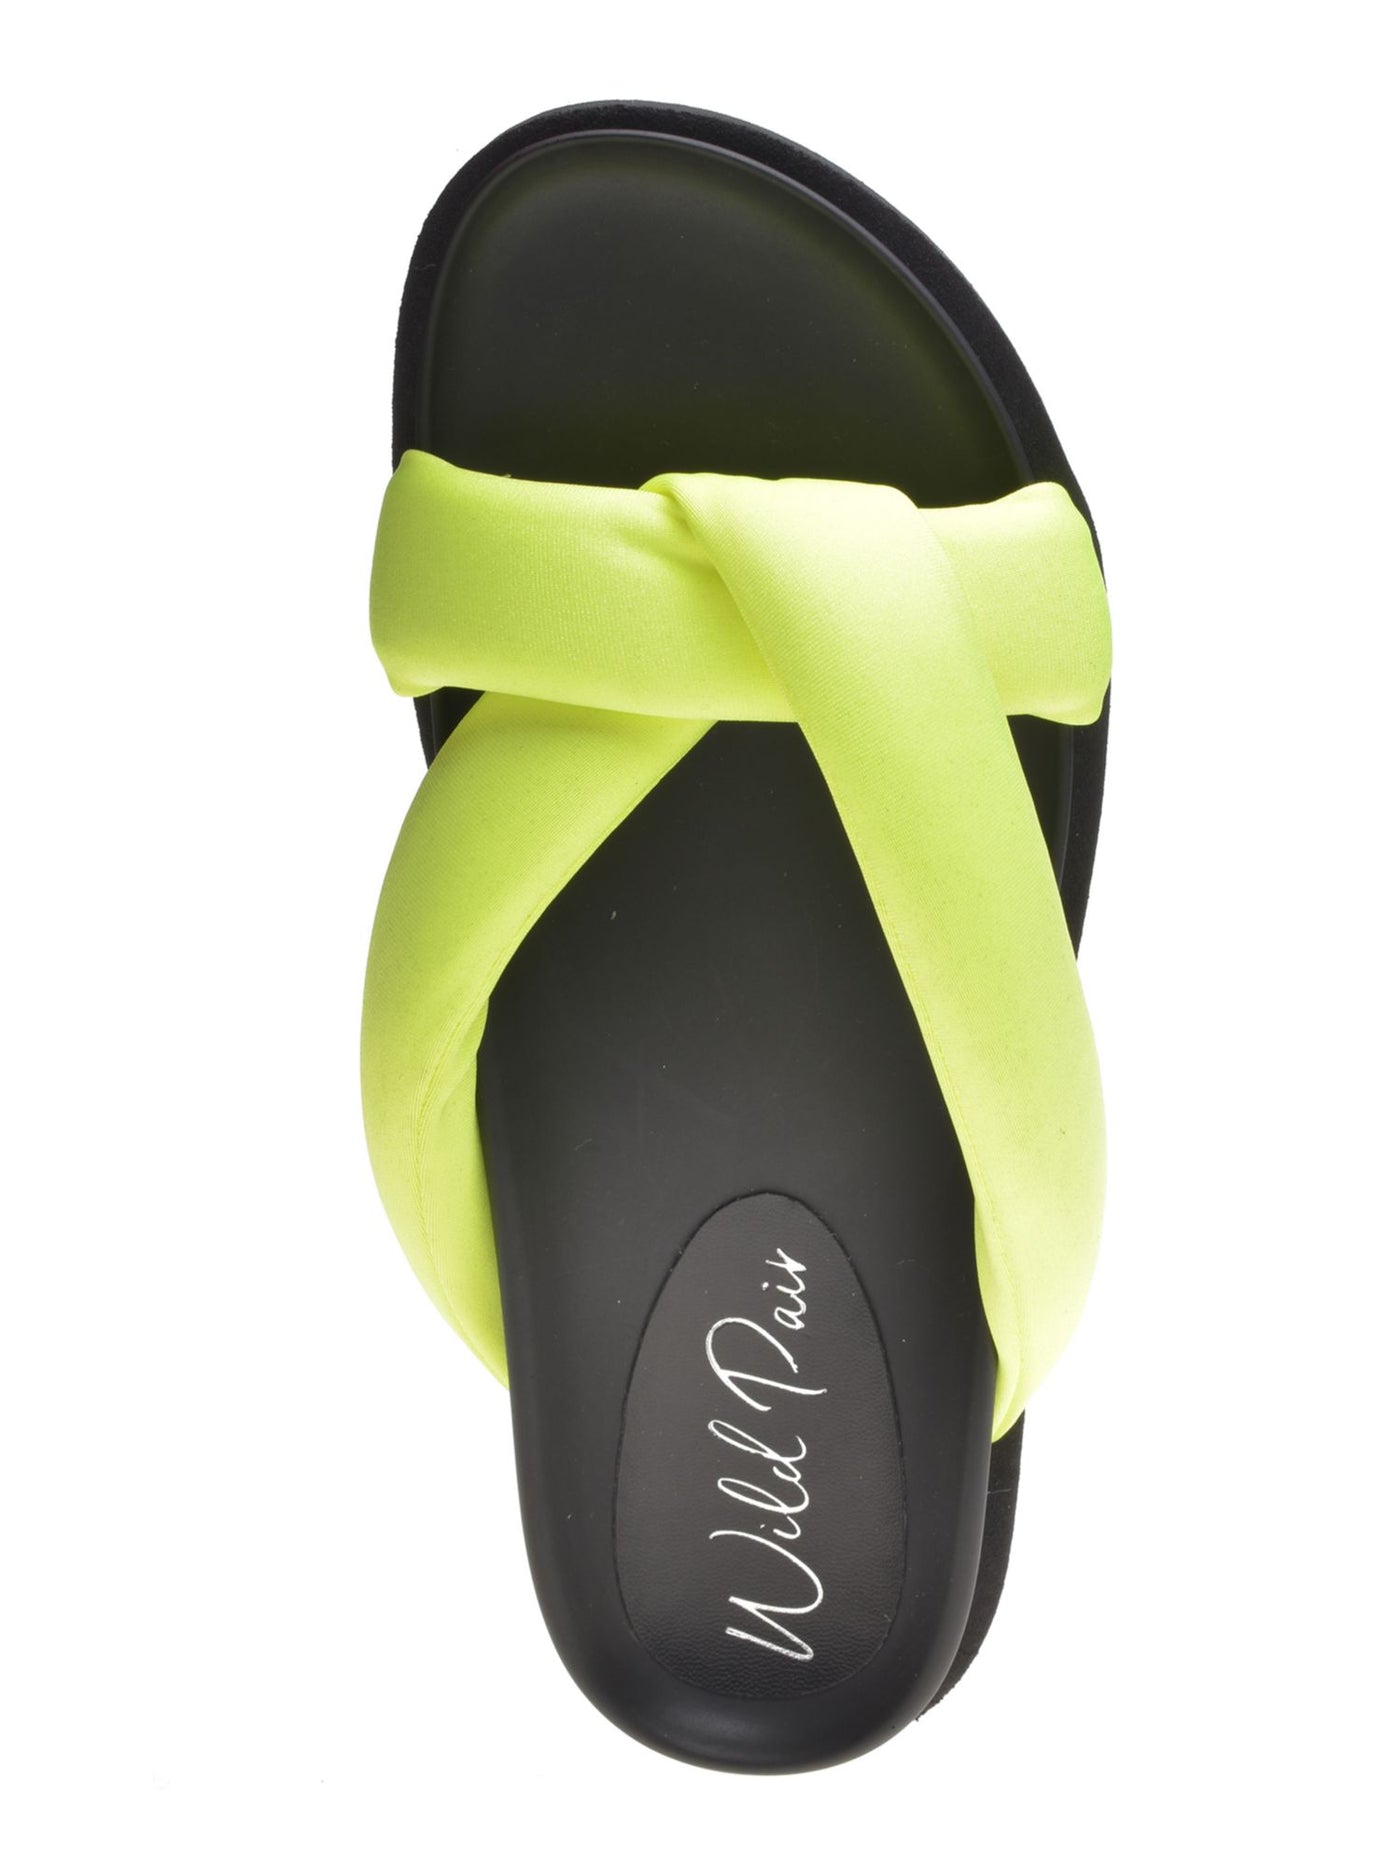 WILD PAIR Womens Green Puffer Sandals. Beck Slip On Slide Sandals Shoes 7 M